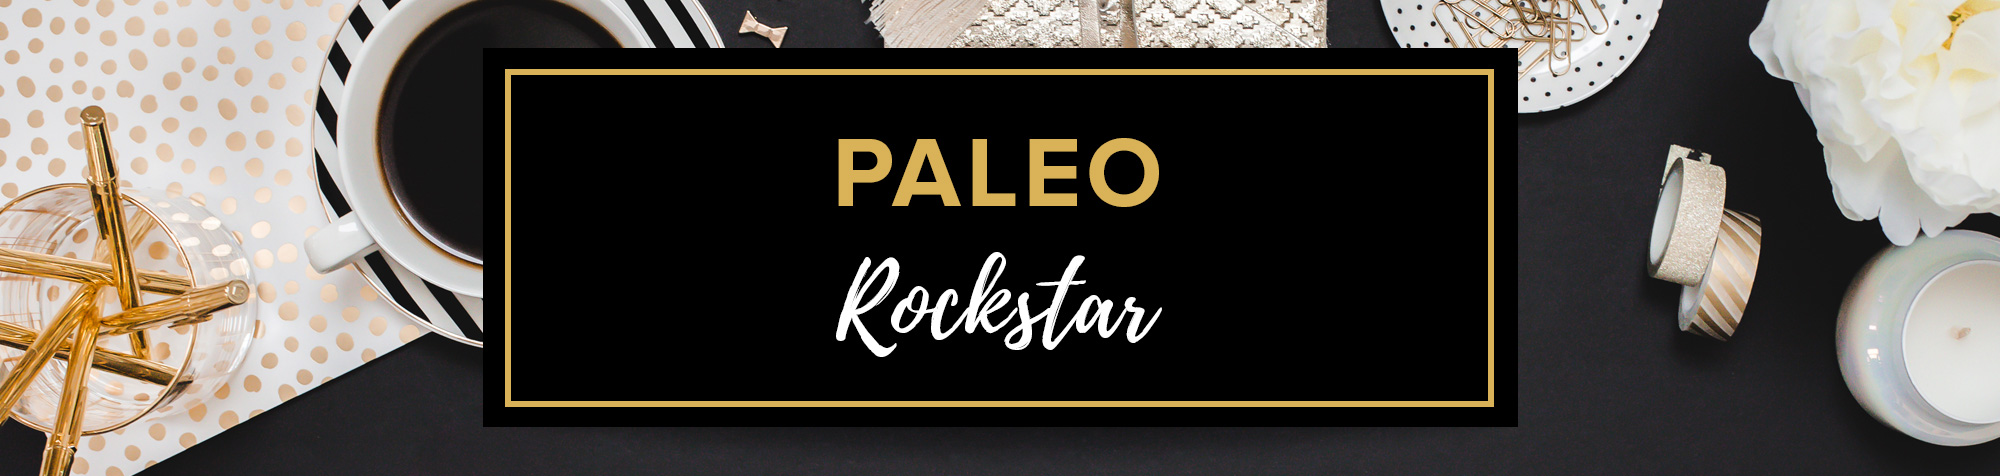 PaleoRockstar